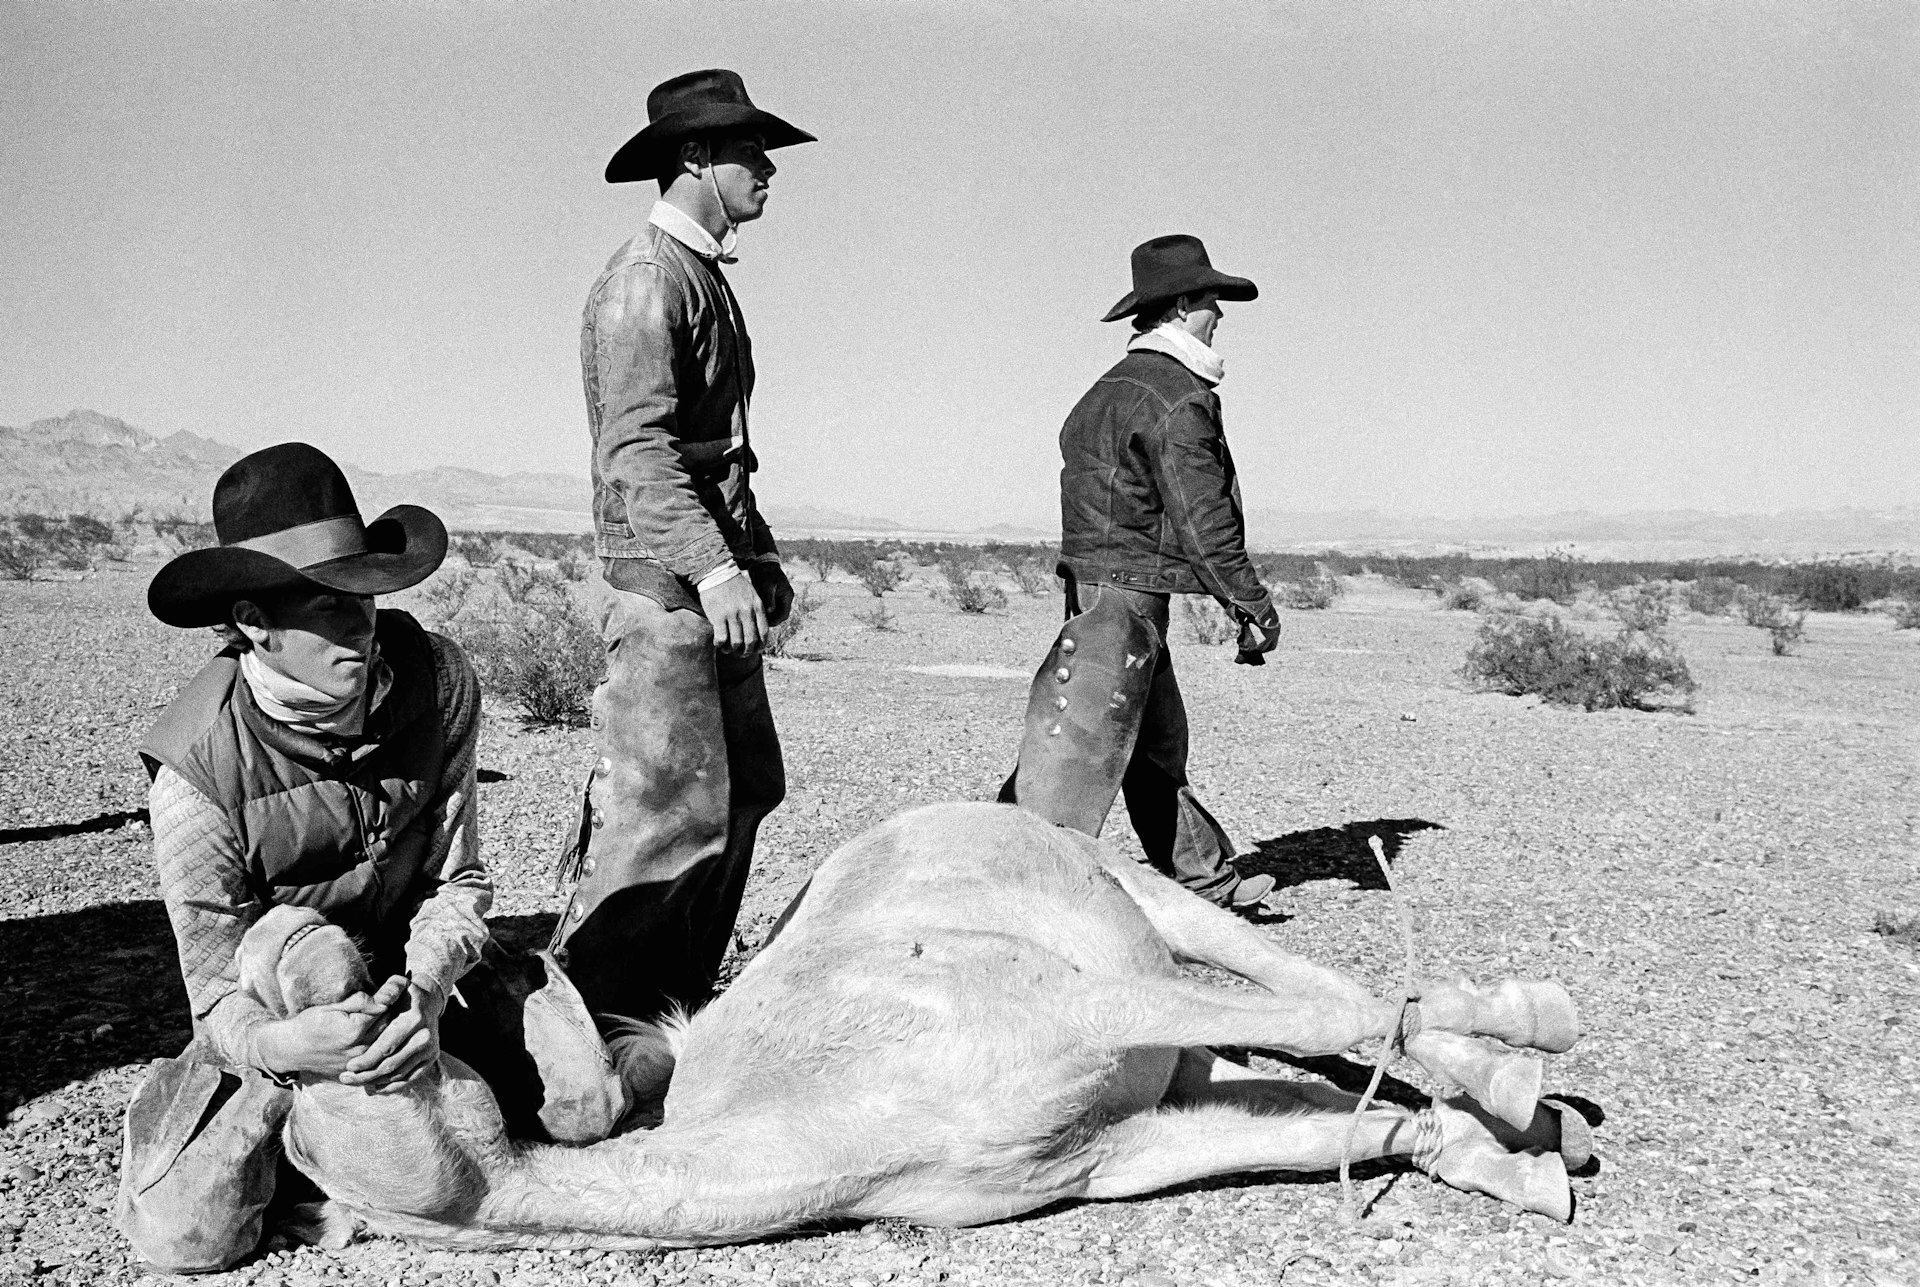 The round-up of the last wild horses in the desert of Arizona. 1980.